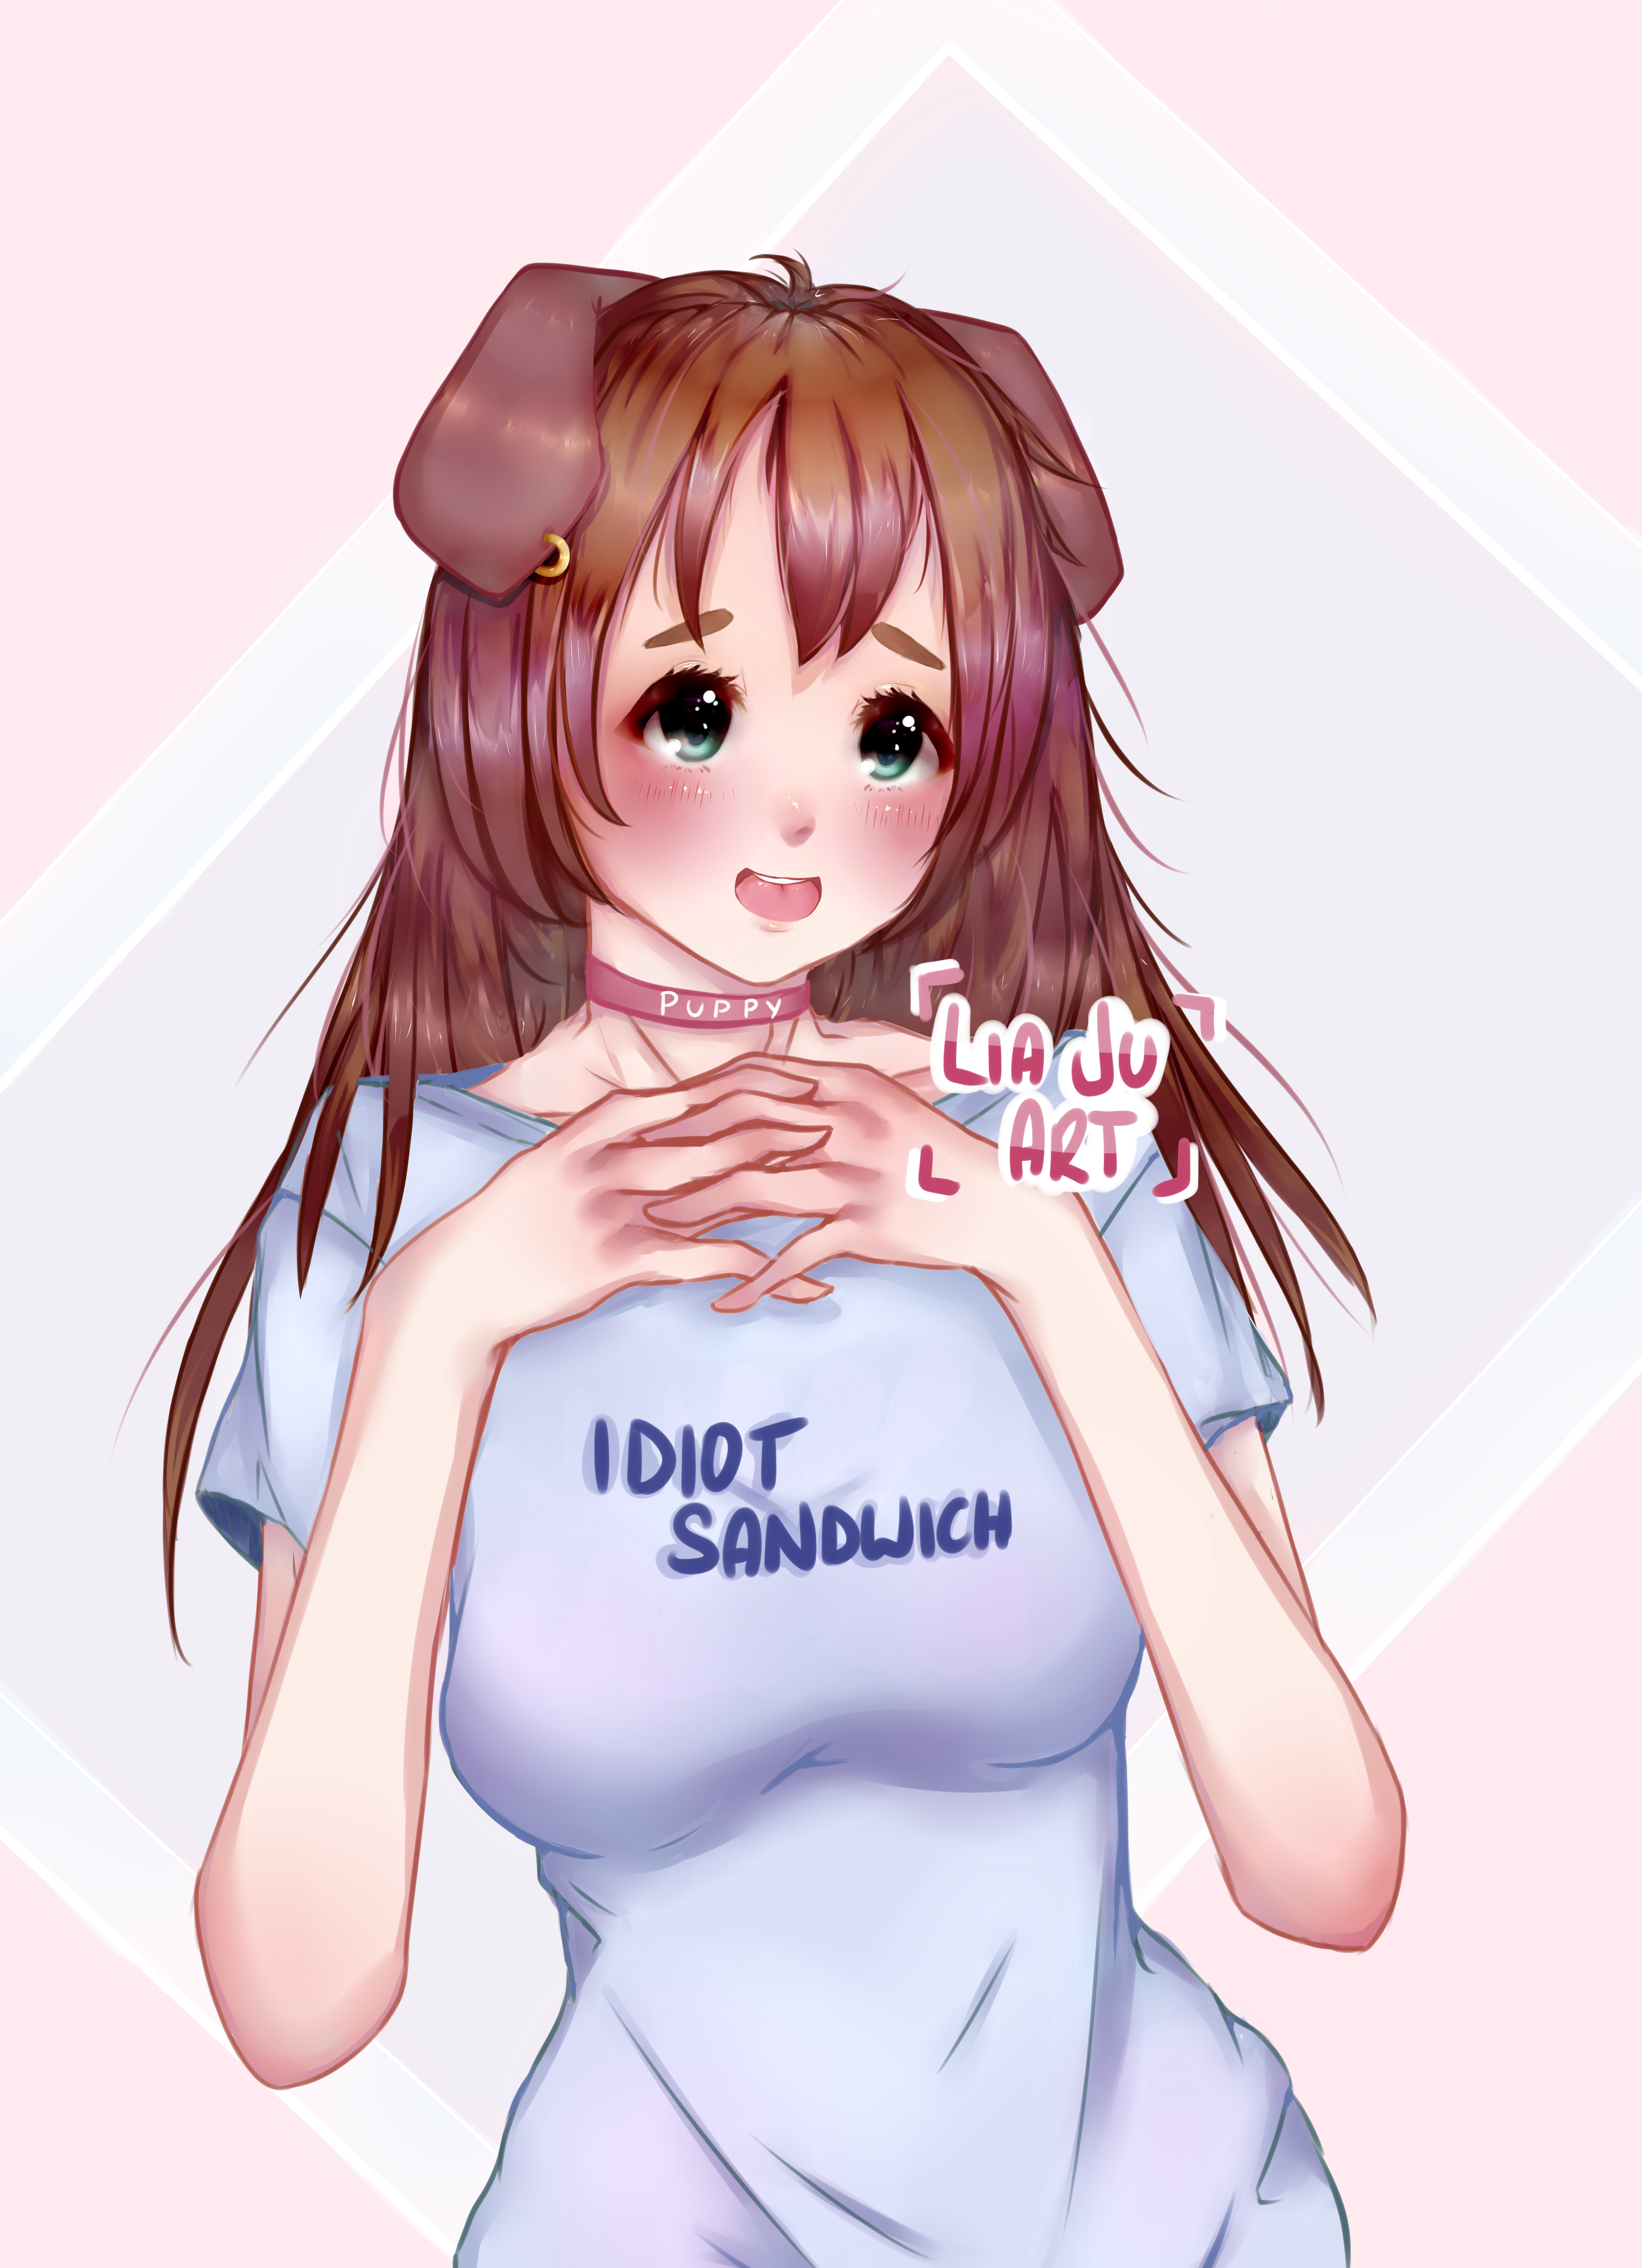 Idiot Sandwich [Anime, Illustration] by LiaJuArt on DeviantArt